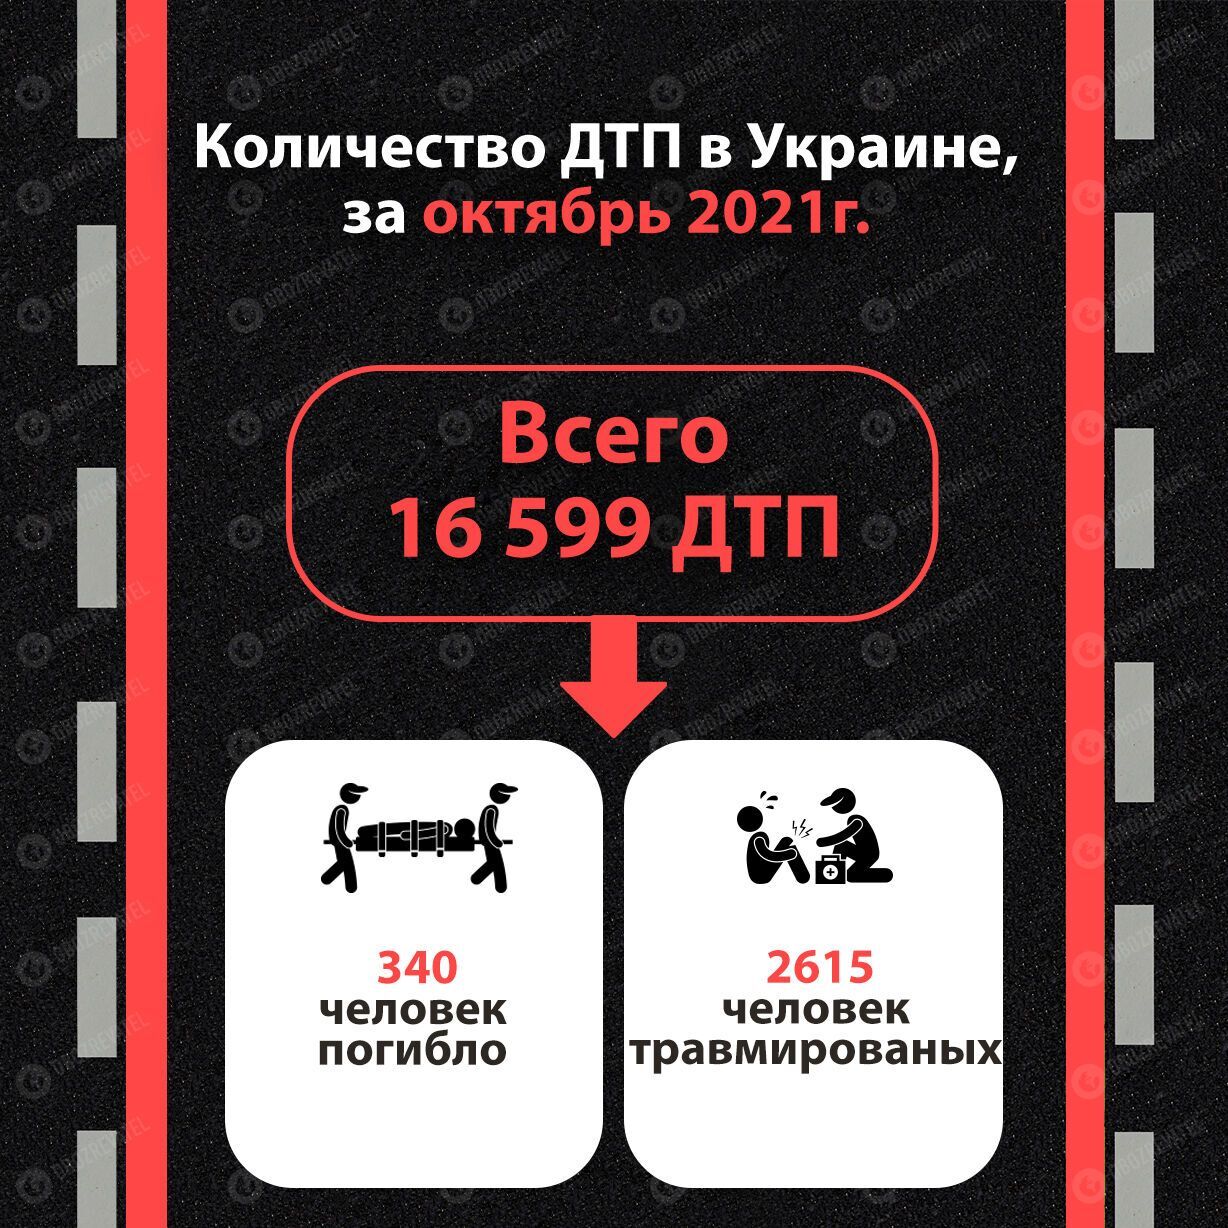 Статистика по ДТП в Украине.